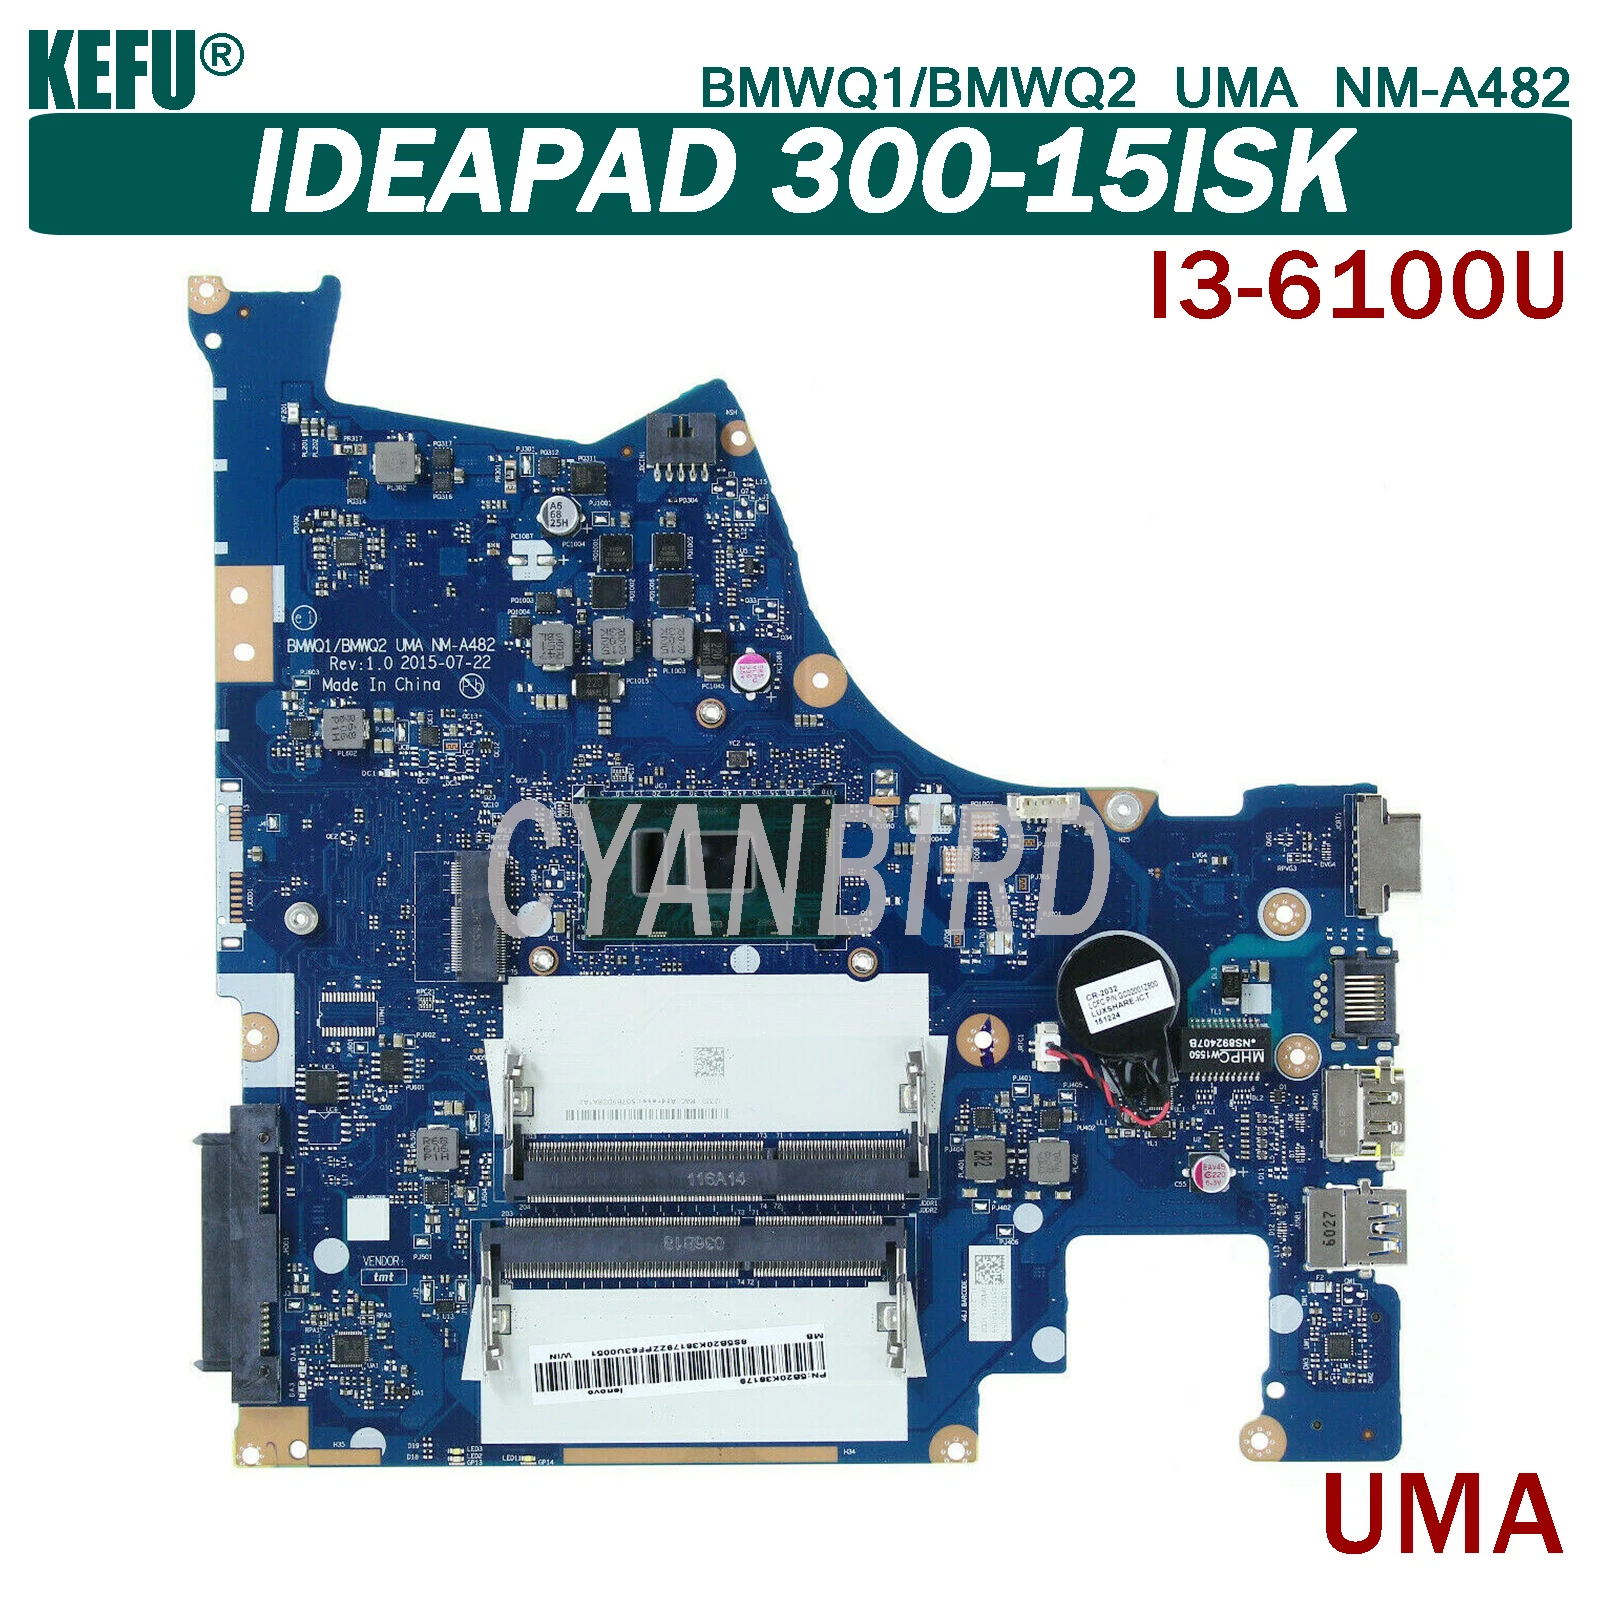 

KEFU BMWQ1/BMWQ2 UMA NM-A482 original mainboard for Lenovo IdeaPad 300-15ISK UMA with DDR3L I3-6100U Laptop motherboard